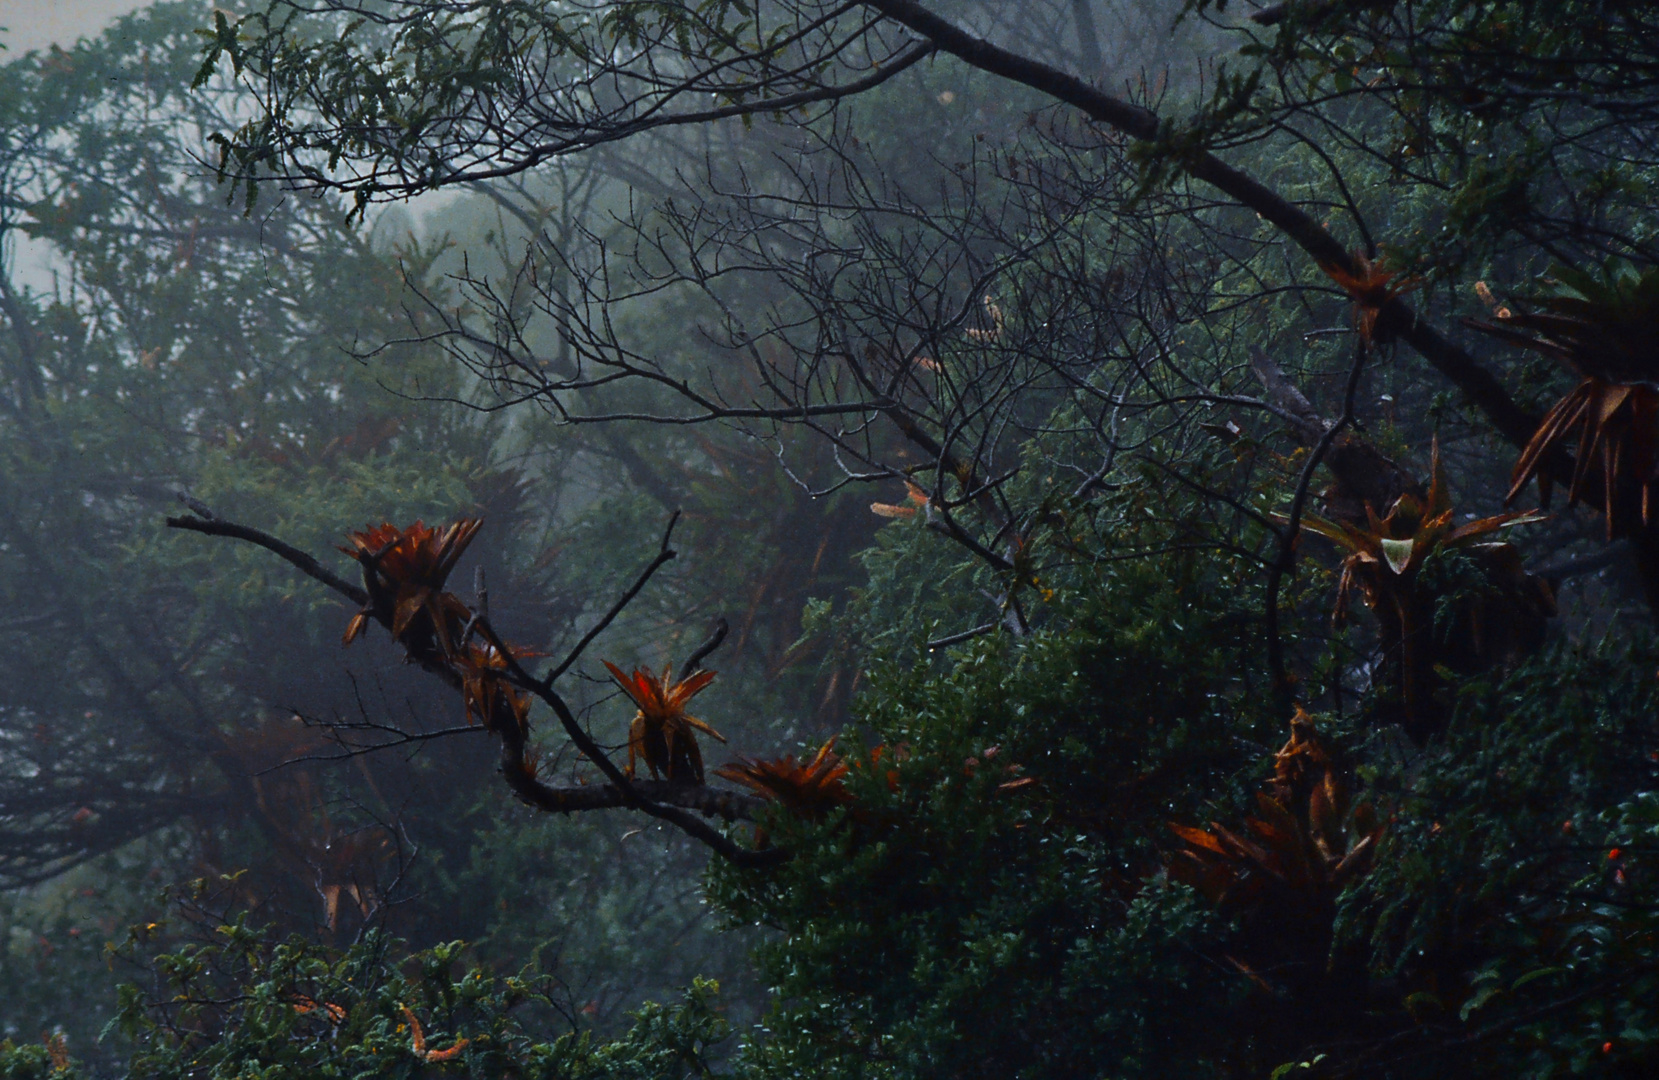 Bromelien im Nebelwald